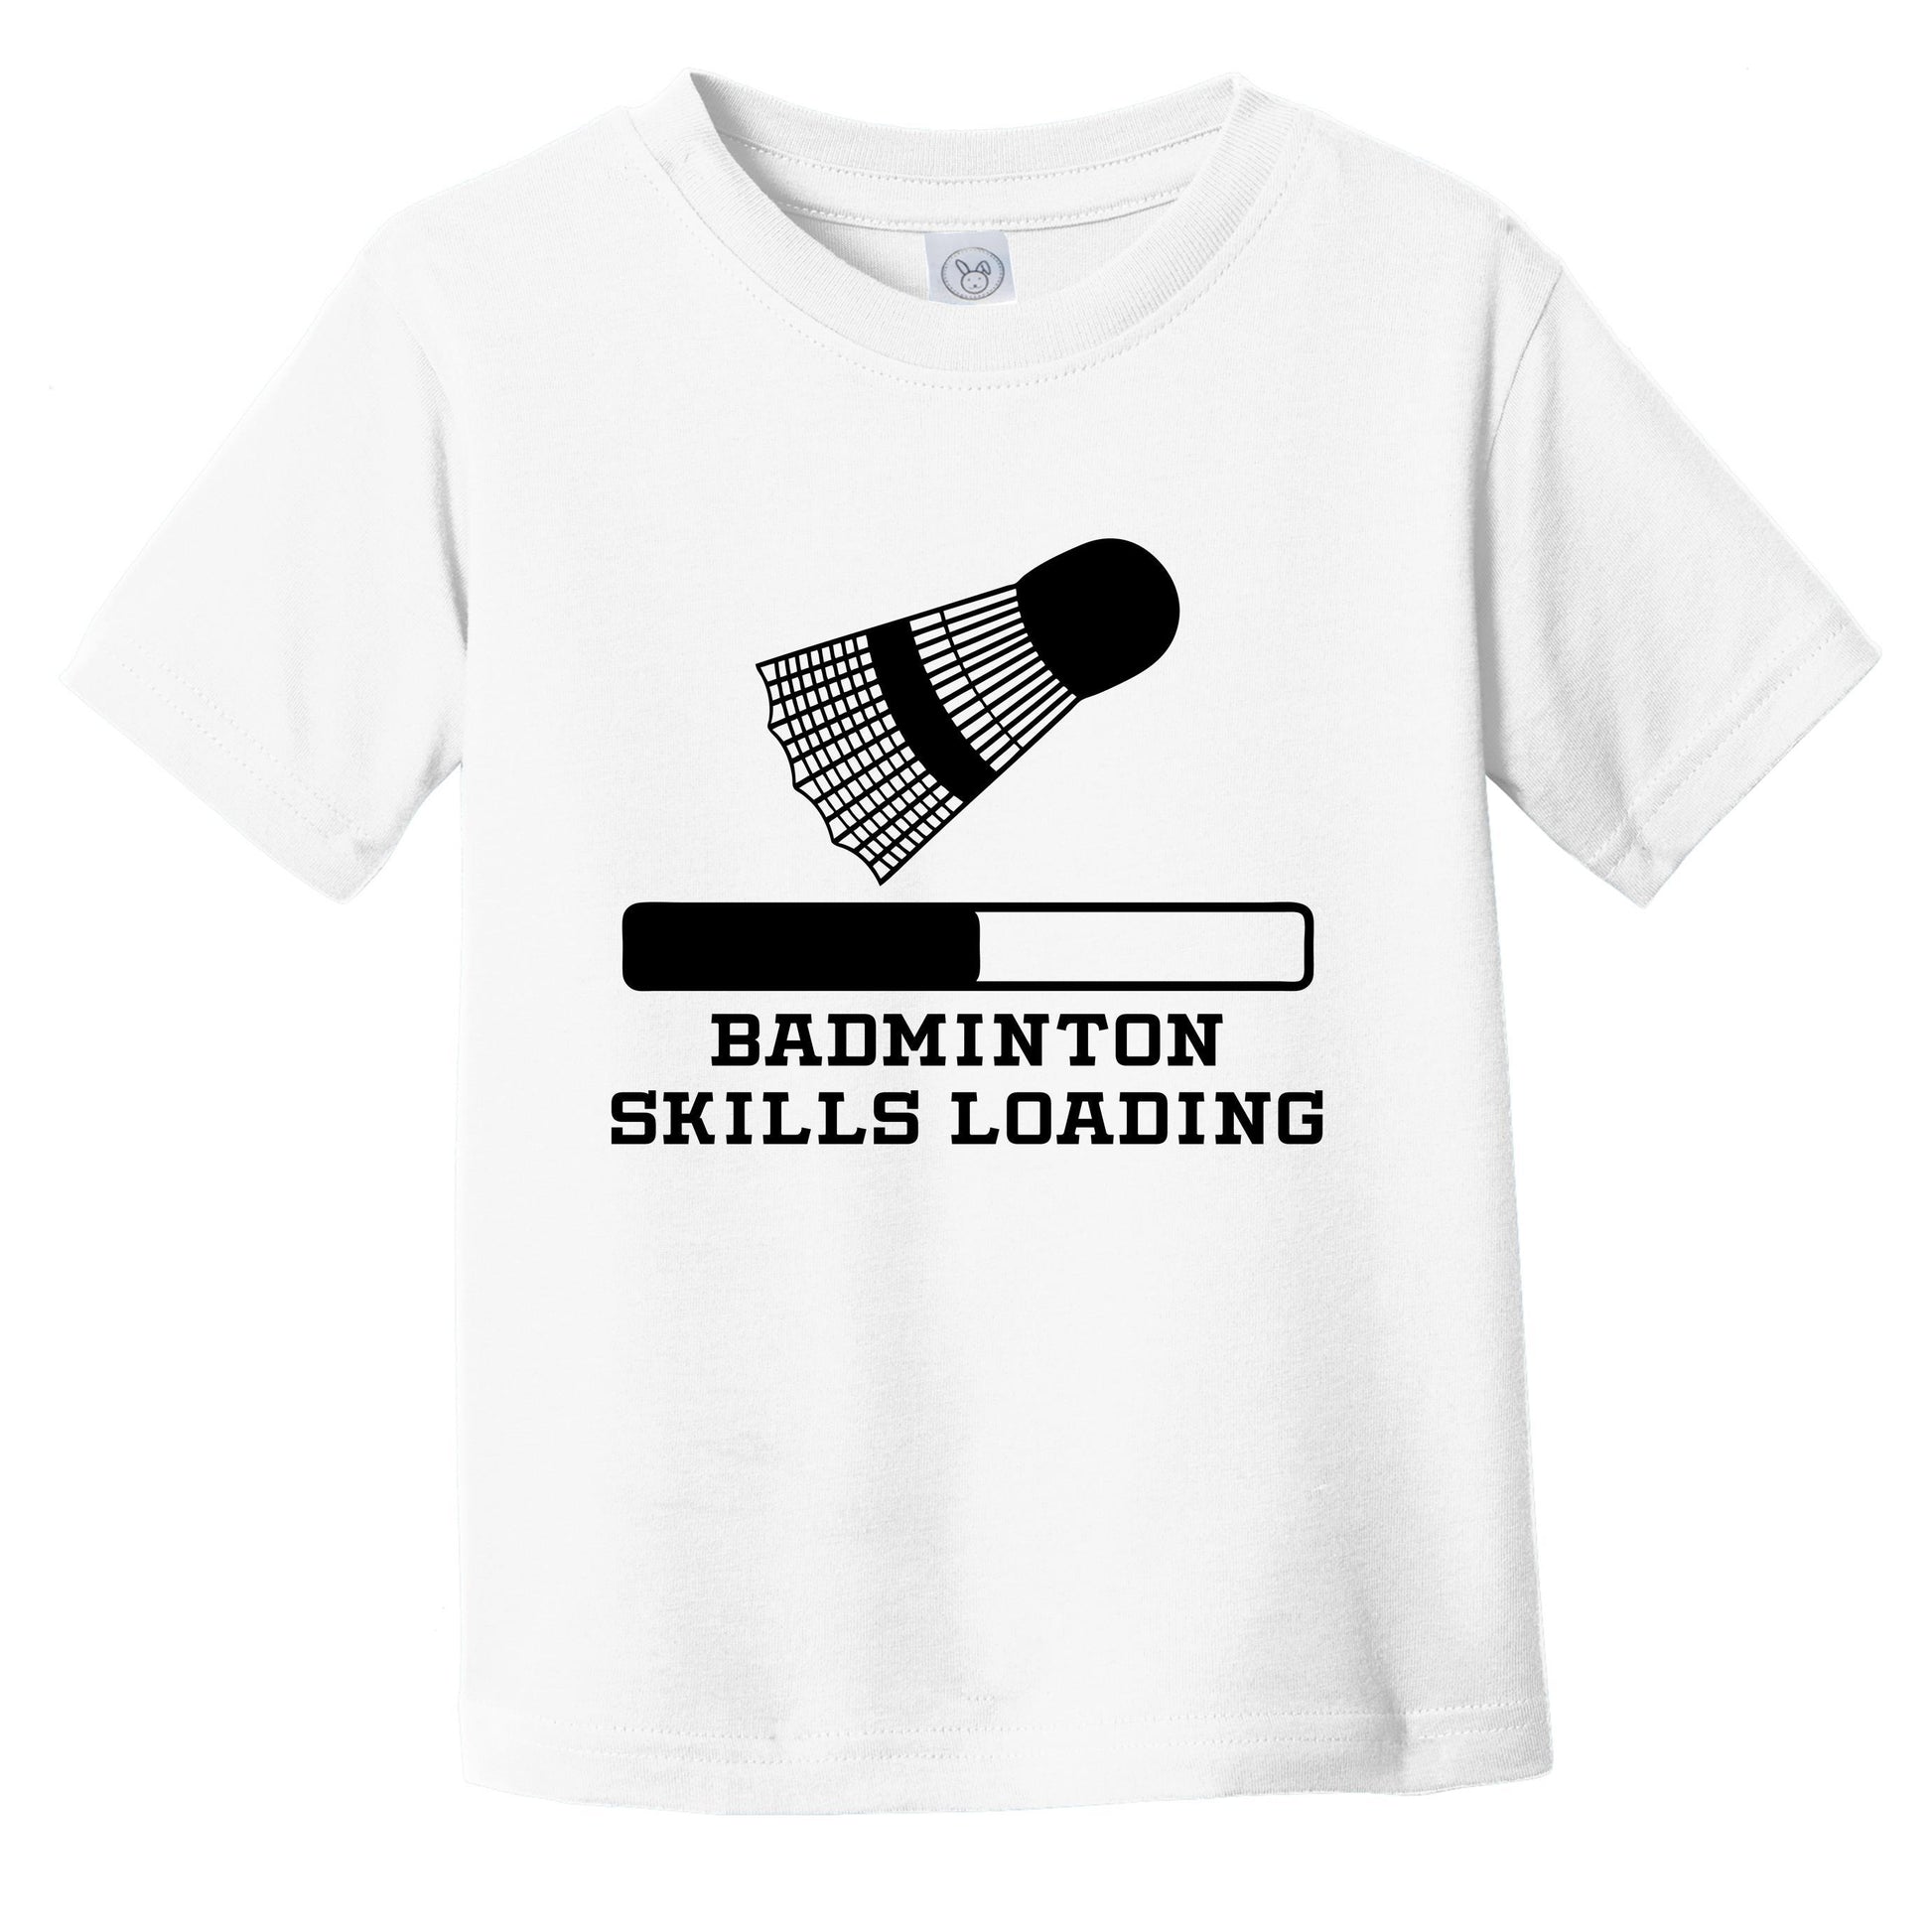 Badminton Skills Loading Funny Sports Humor Infant Toddler T-Shirt